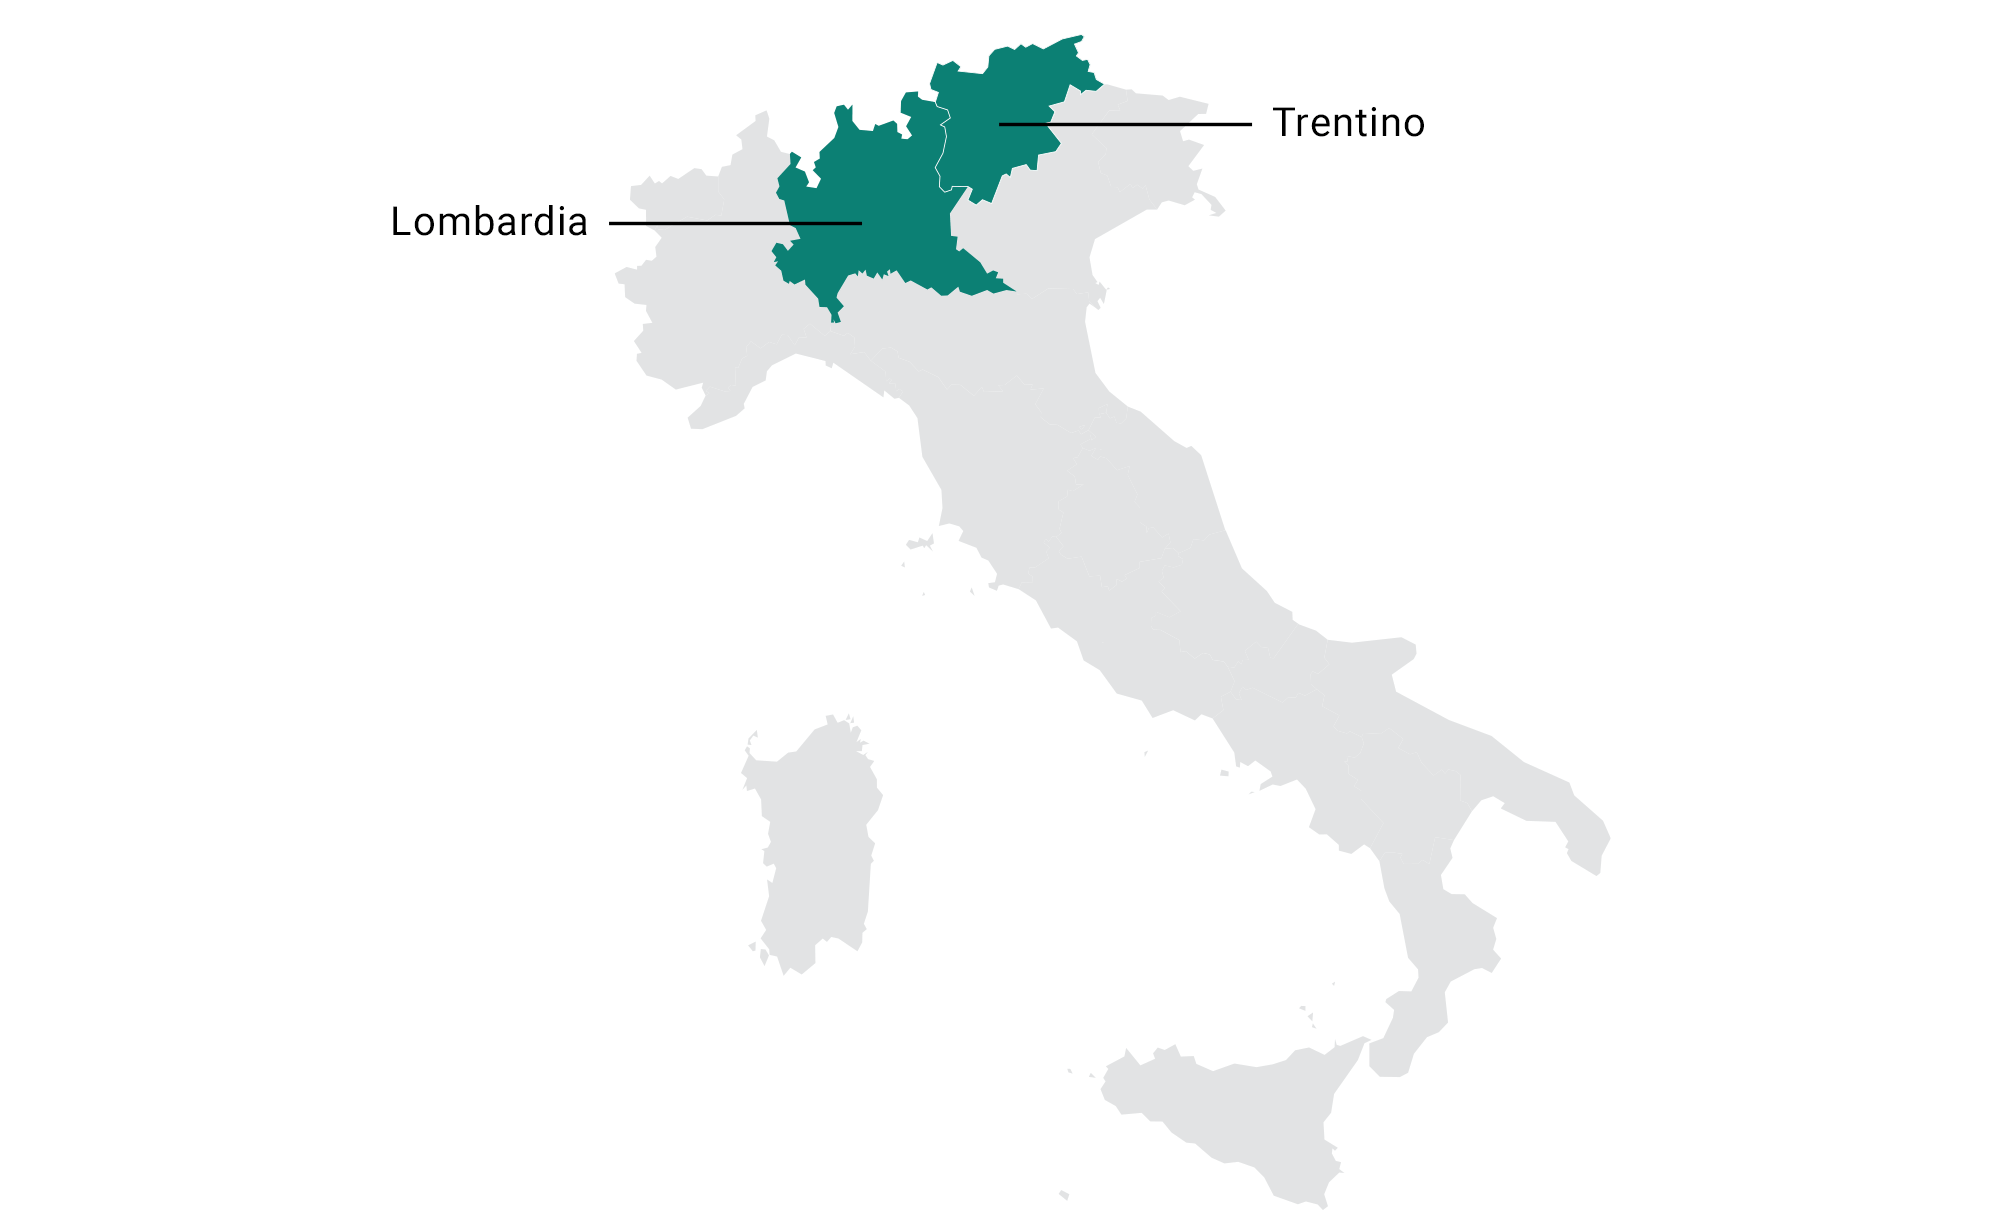 Map of Italian sparkling wine regions: Lombardia and Trentino